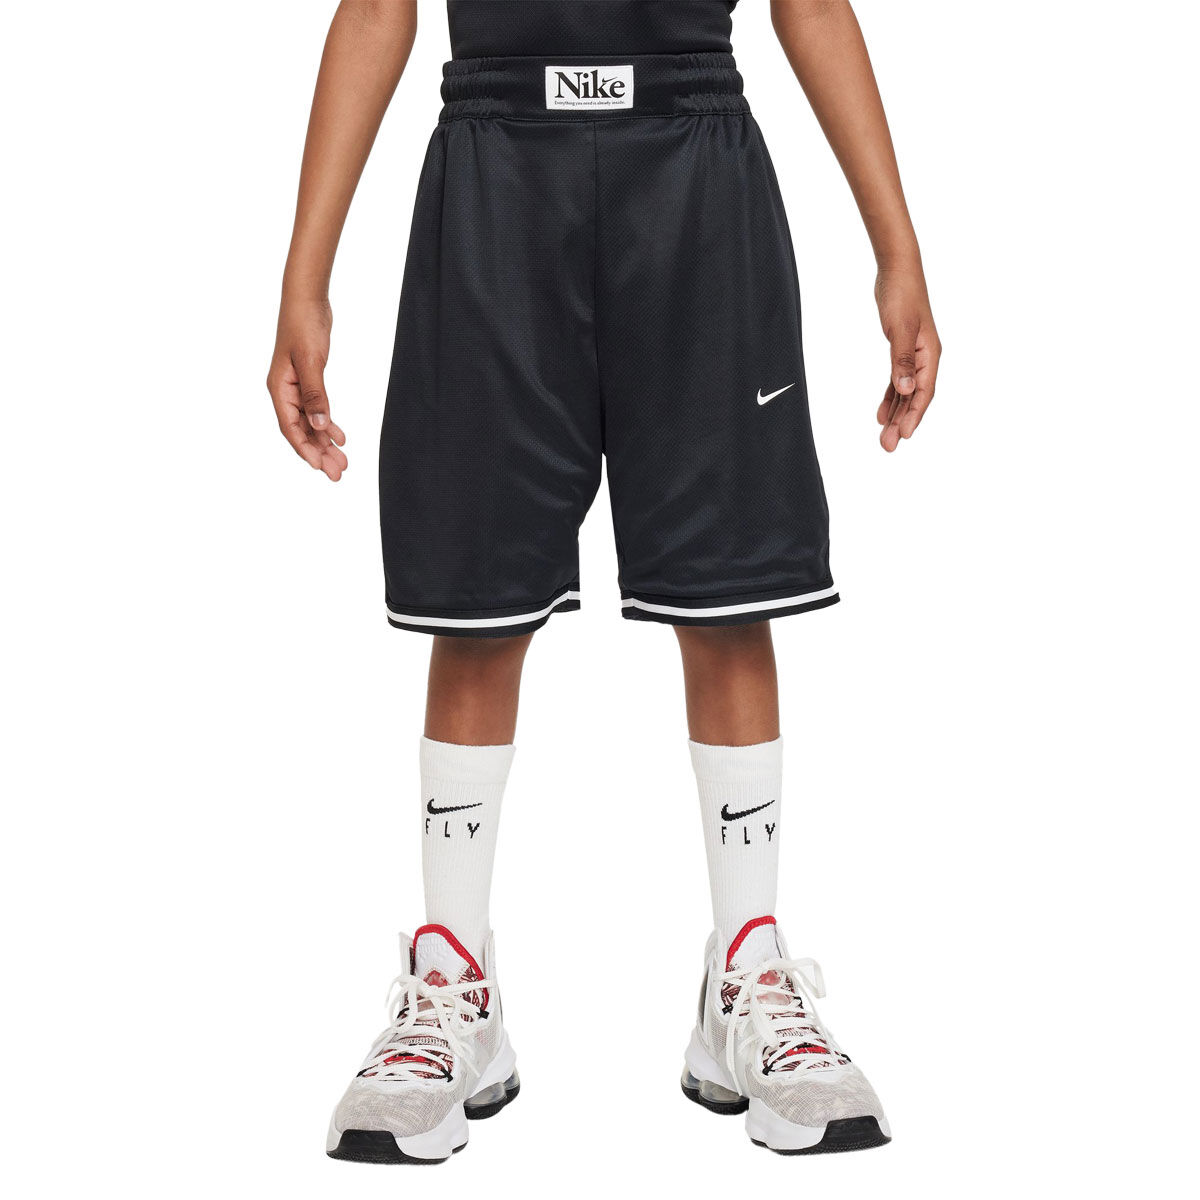 Nike Kids Culture of Basketball Reversible Basketball Shorts Black